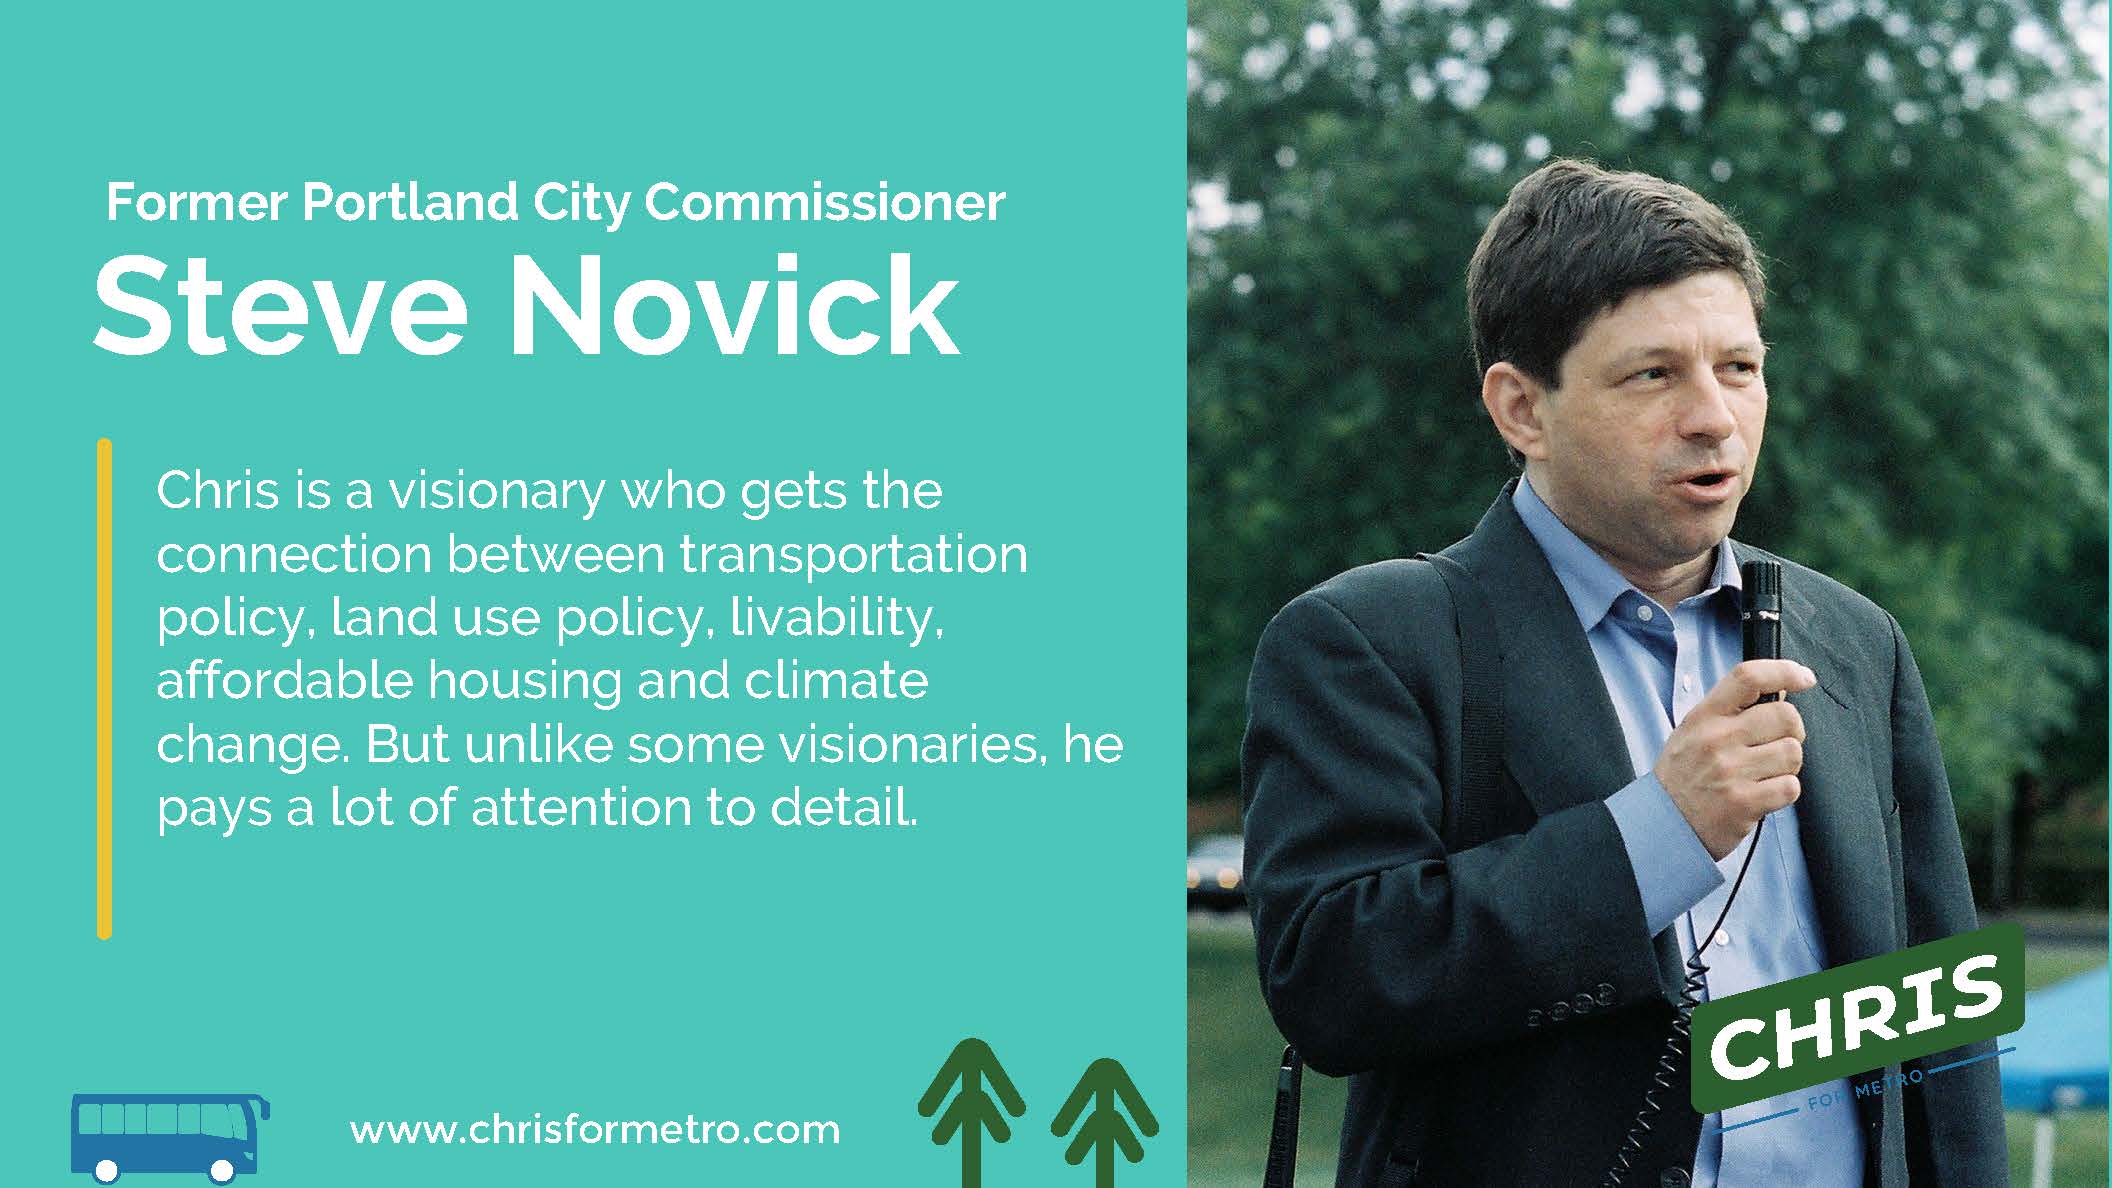 Steve Novick Endorsement